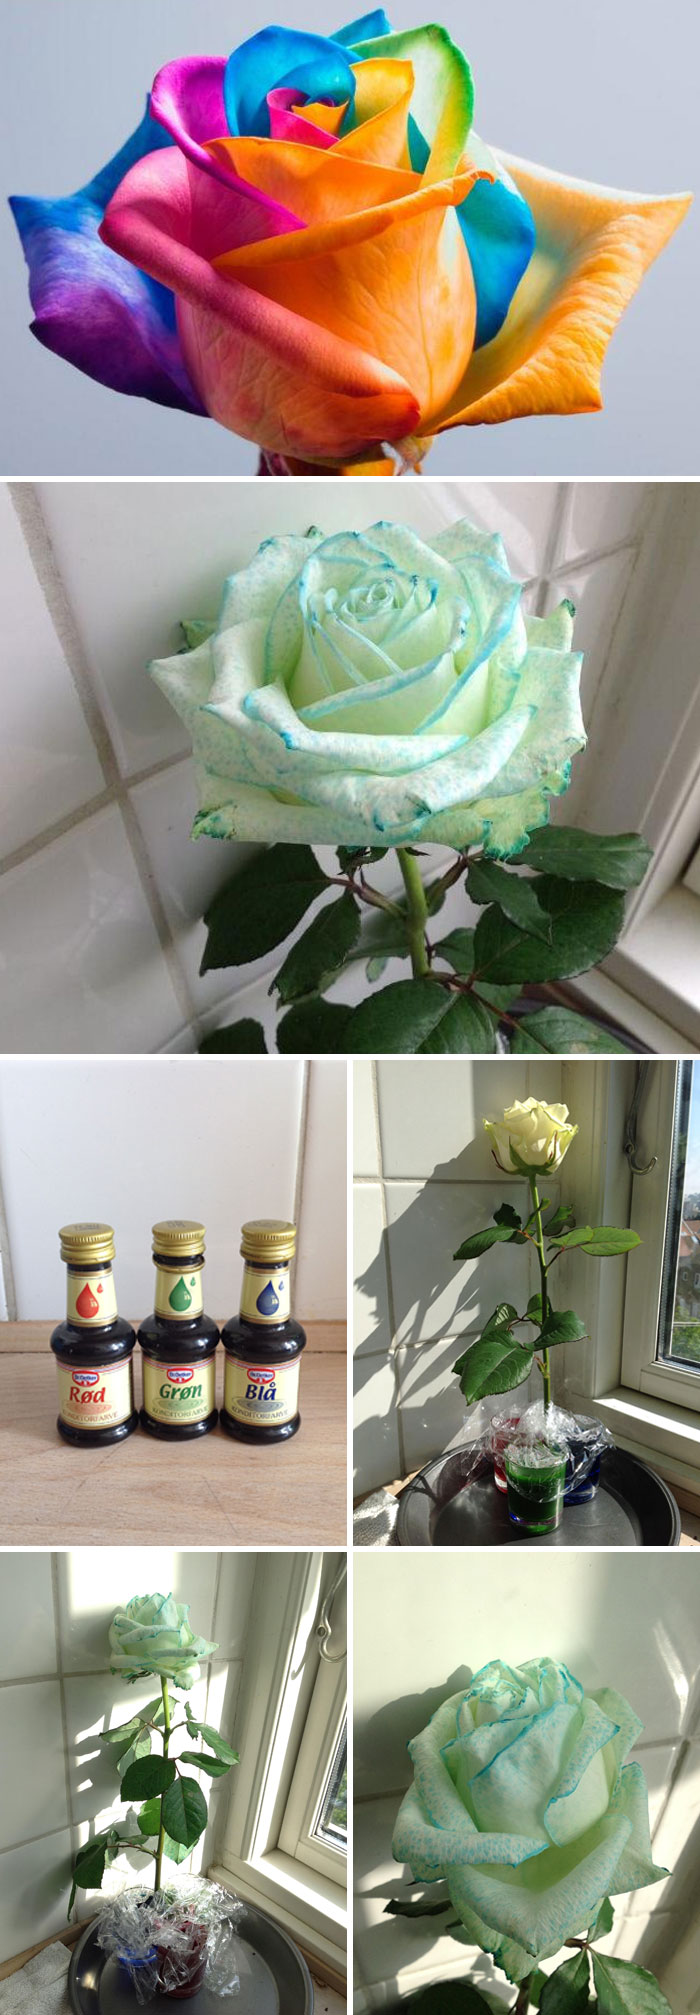 Rainbow Roses: Not Quite Right, But Still Interesting